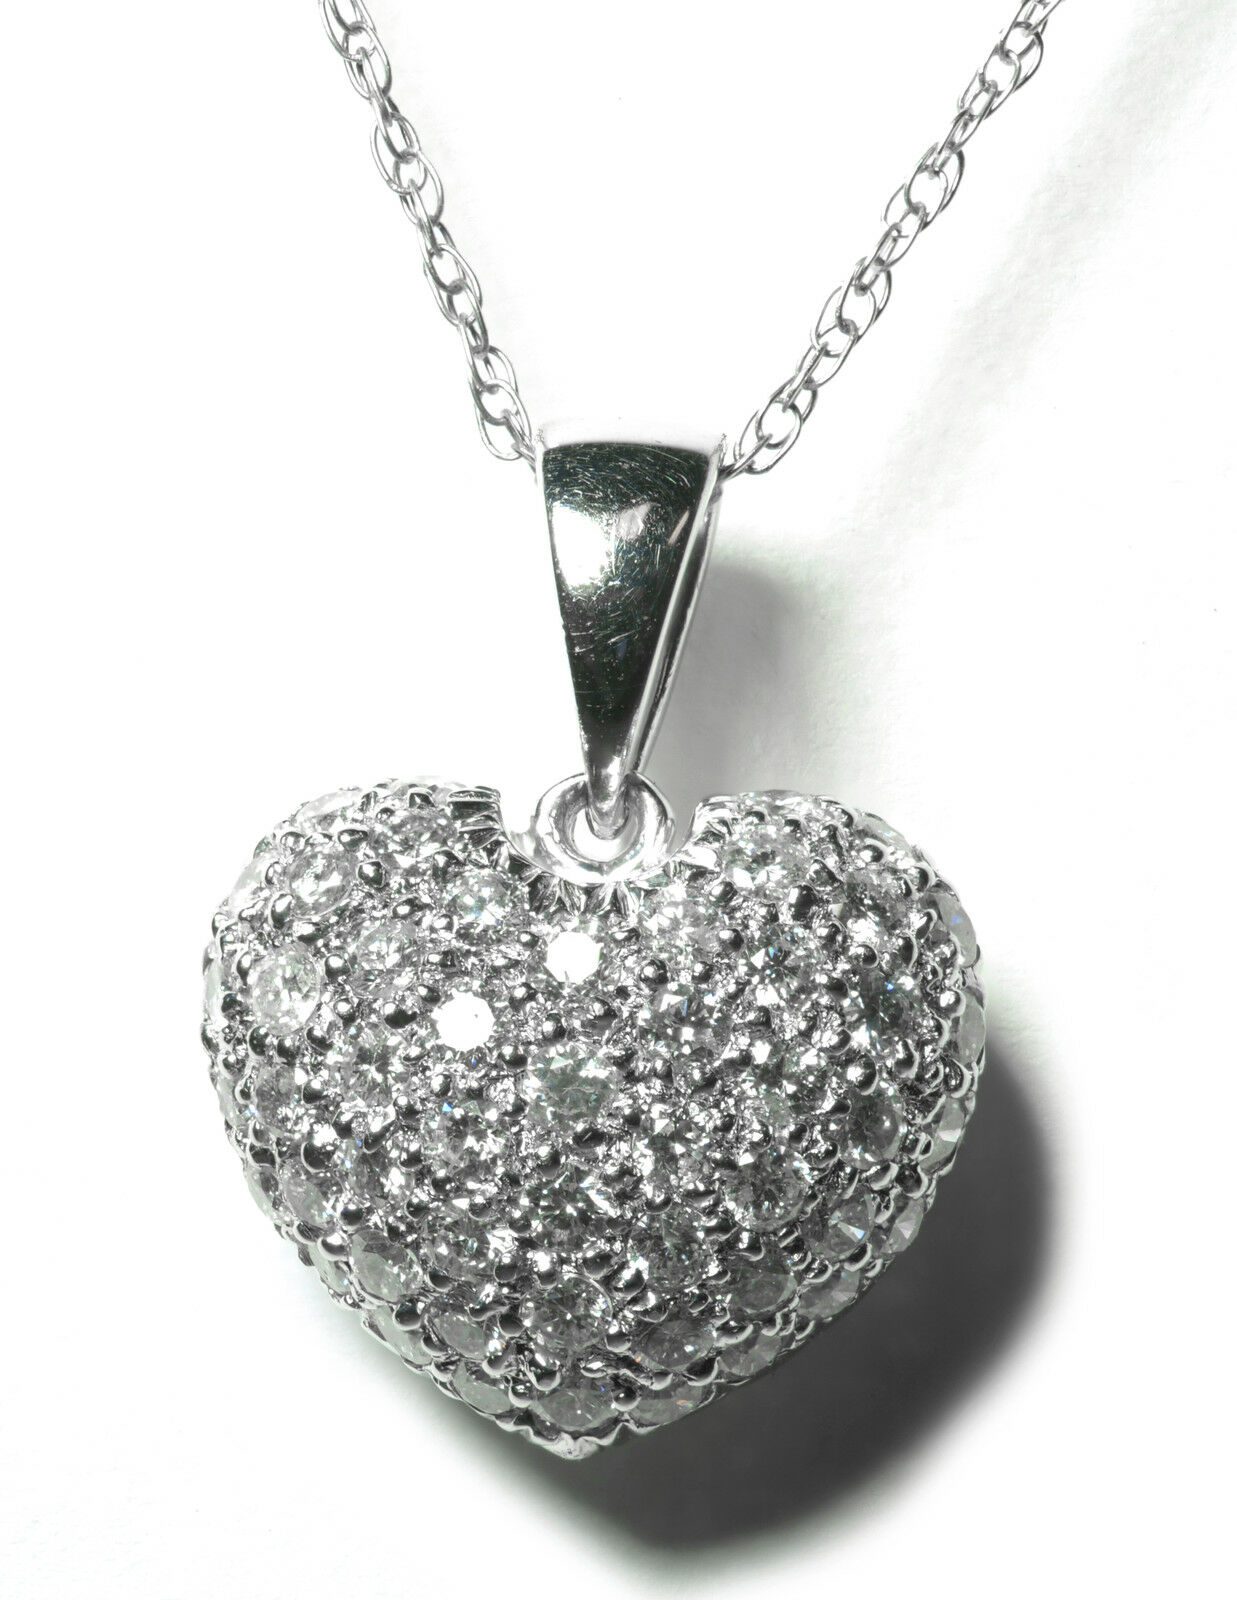 Mini-Pave-Diamond-Heart-Pendant-Necklace-in-18k-White-Gold-6-ct-TDW-VS1VS2-C-131707237052